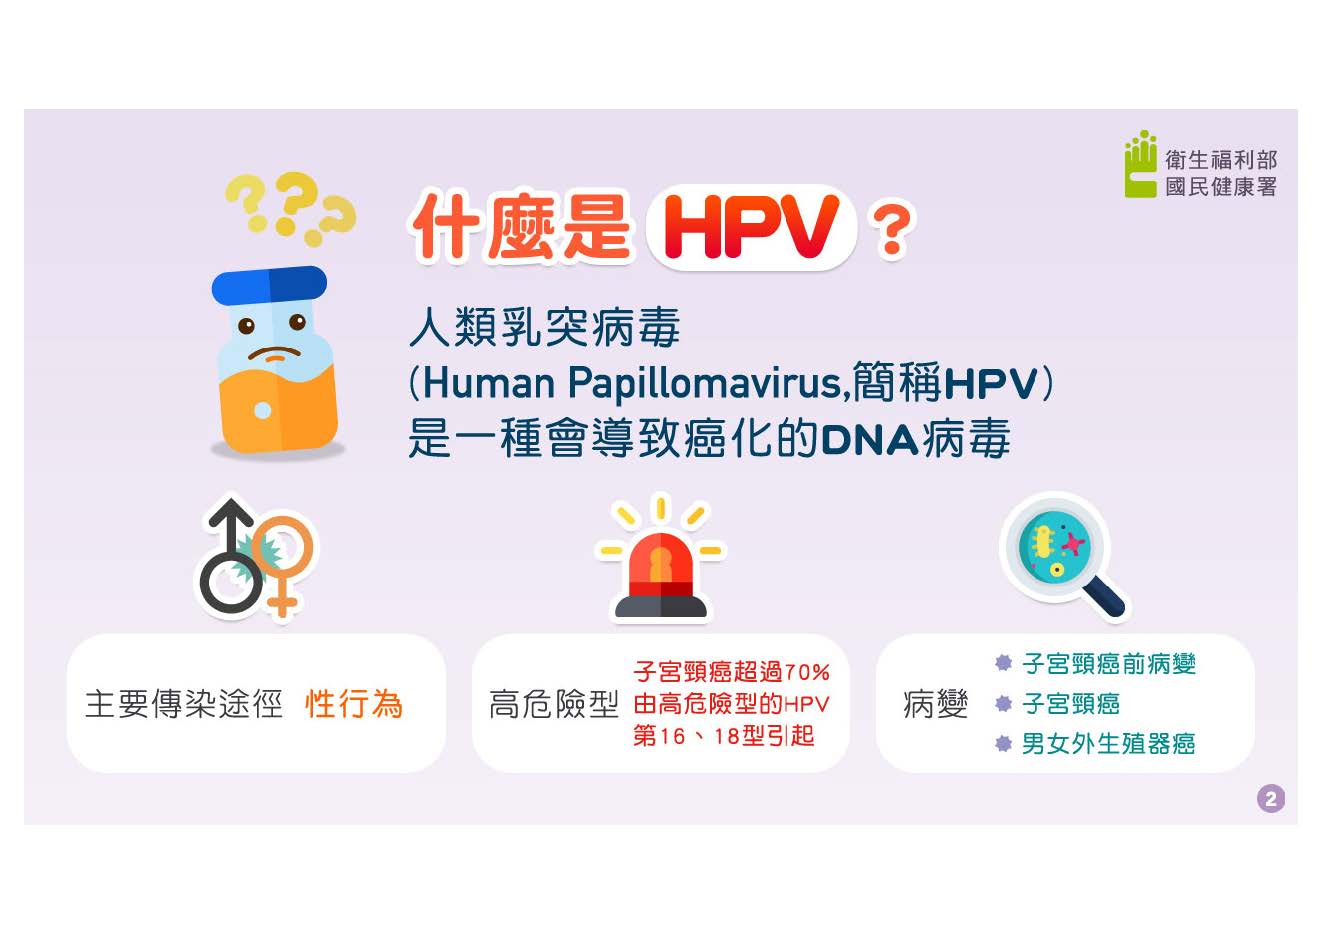 32.HPV疫苗可預防子宮頸癌